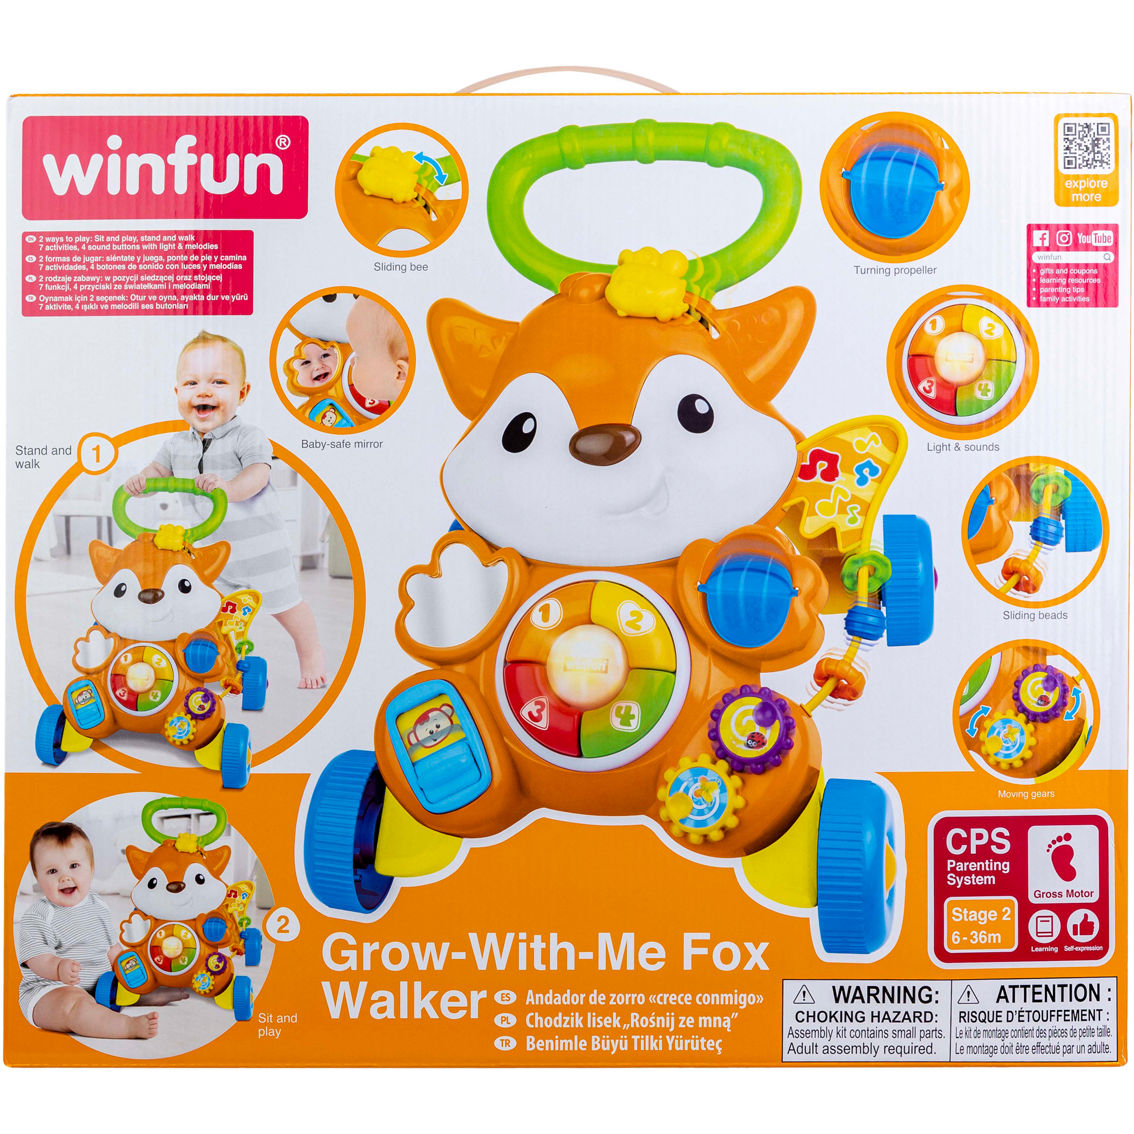 Winfun Grow With Me Fox Walker - Image 5 of 5